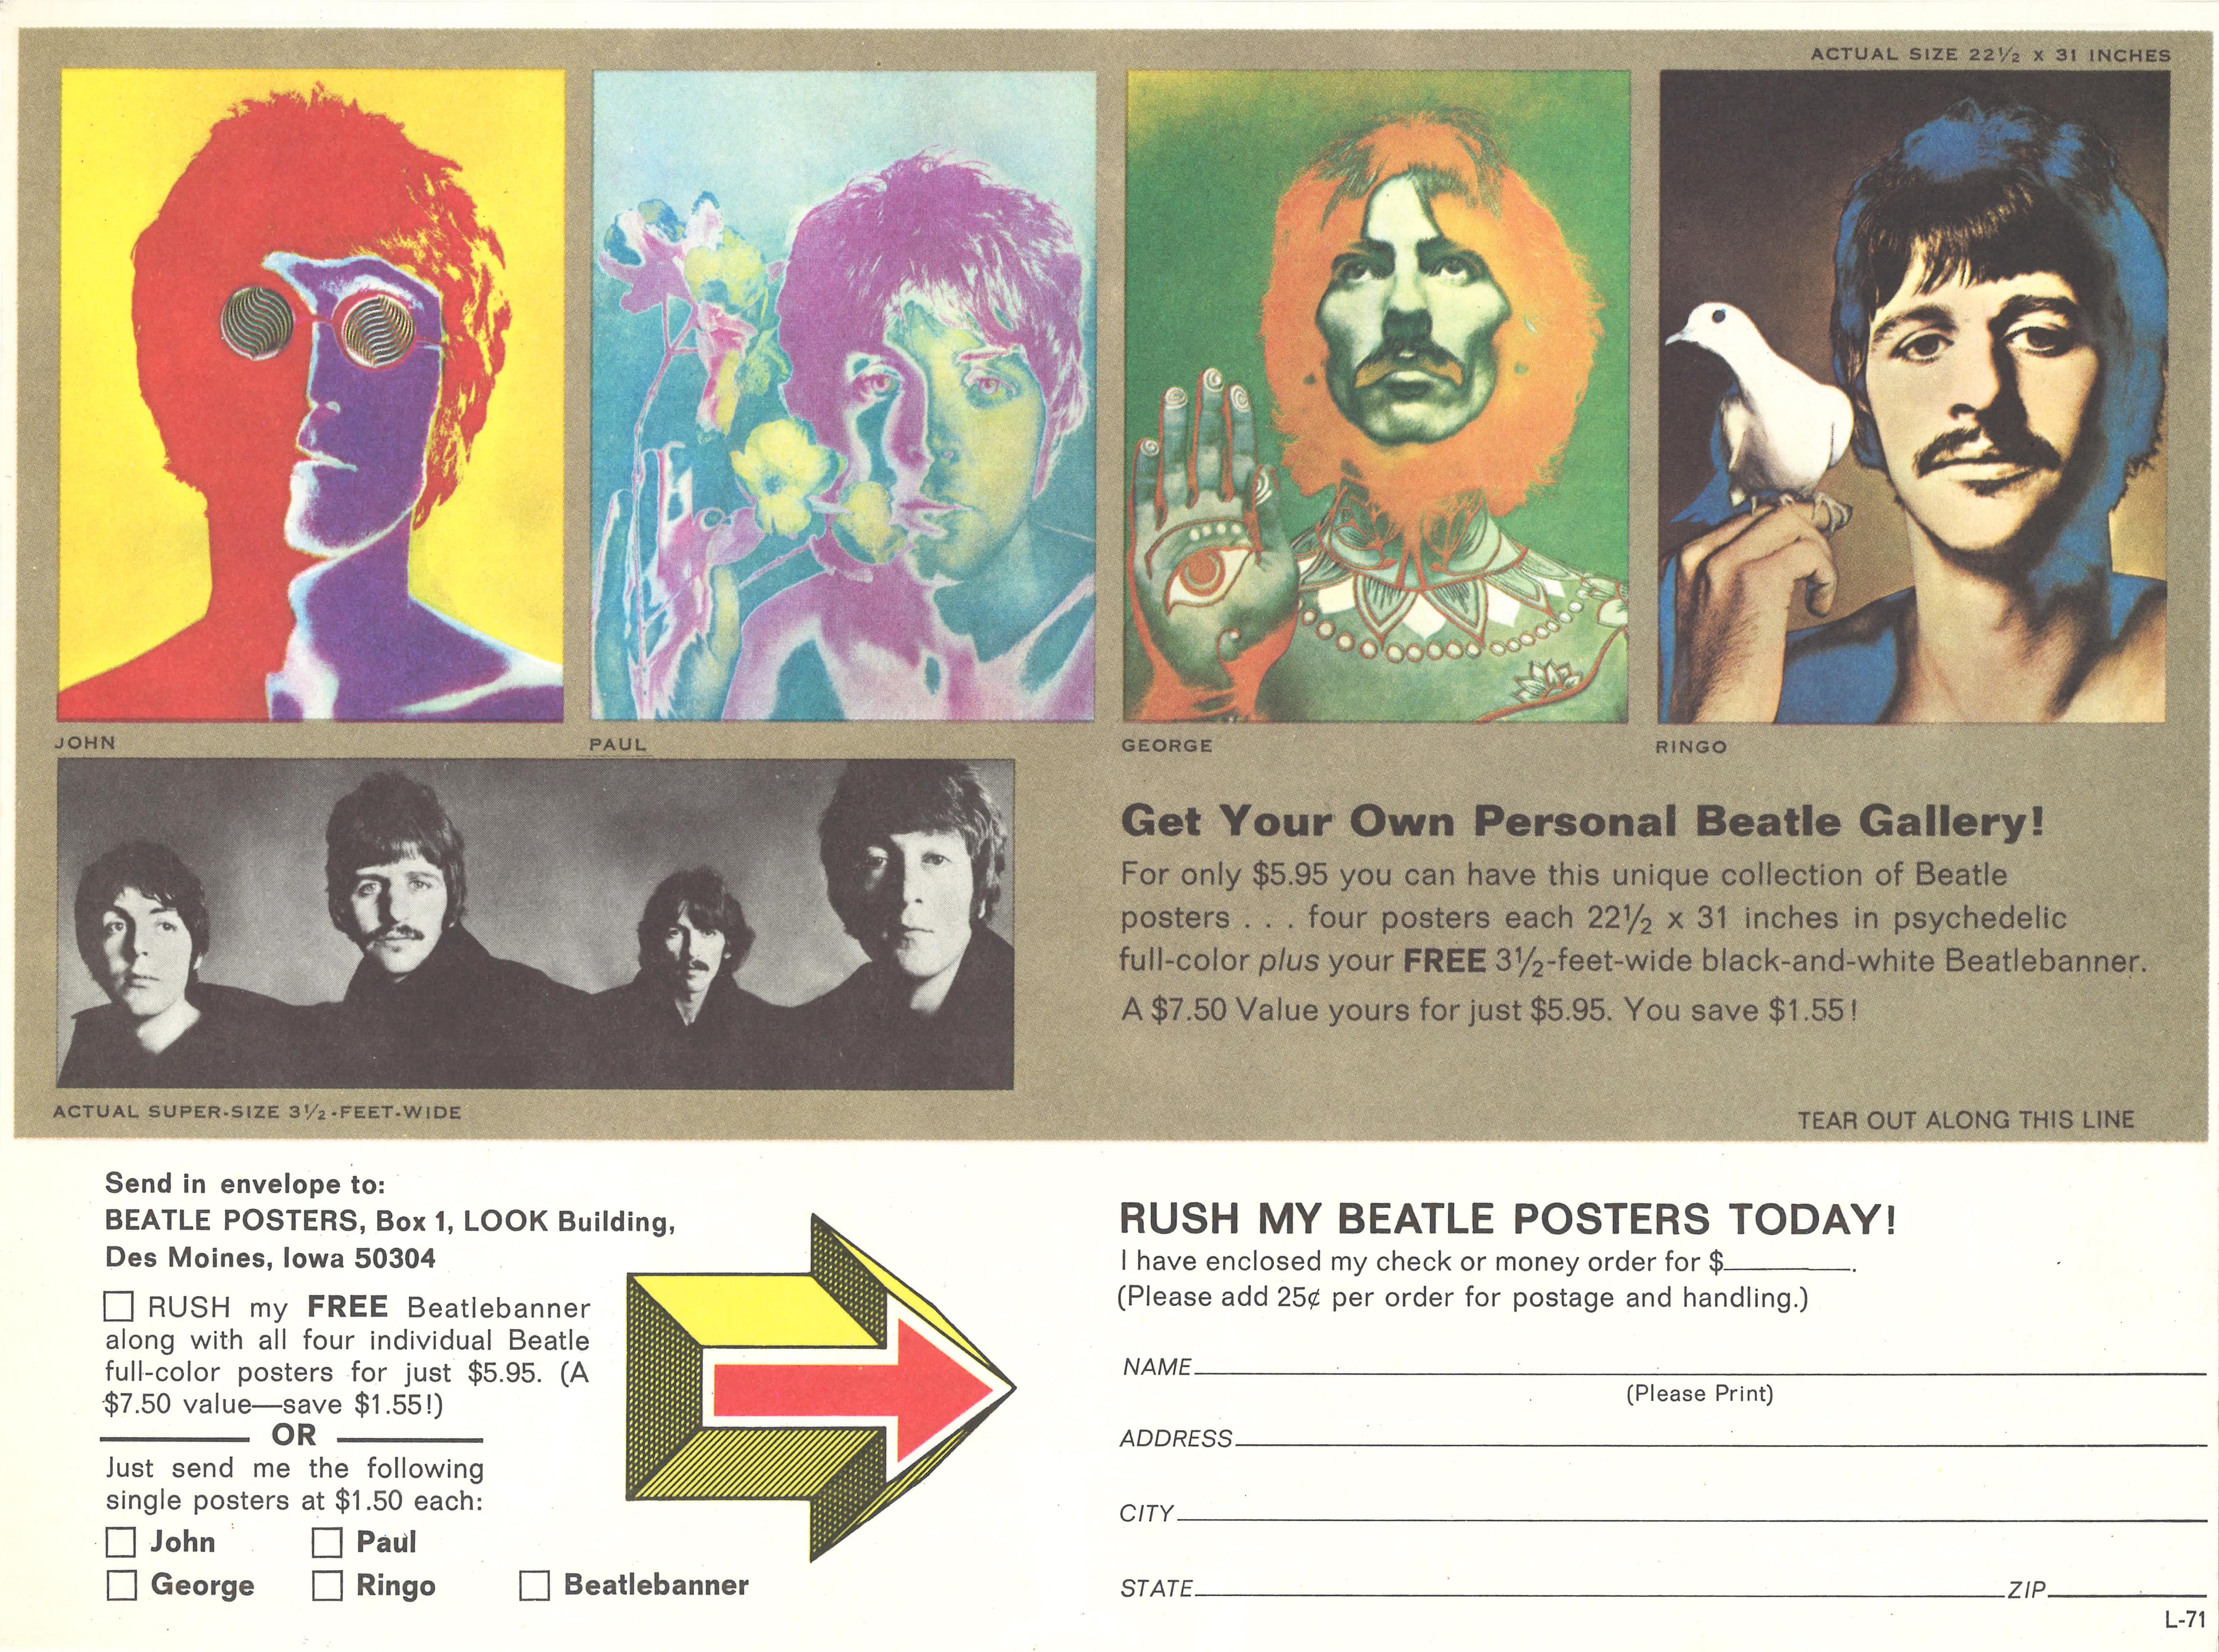 Post-Modern The Beatles Original Vintage Banner Poster by Richard Avedon, 1967